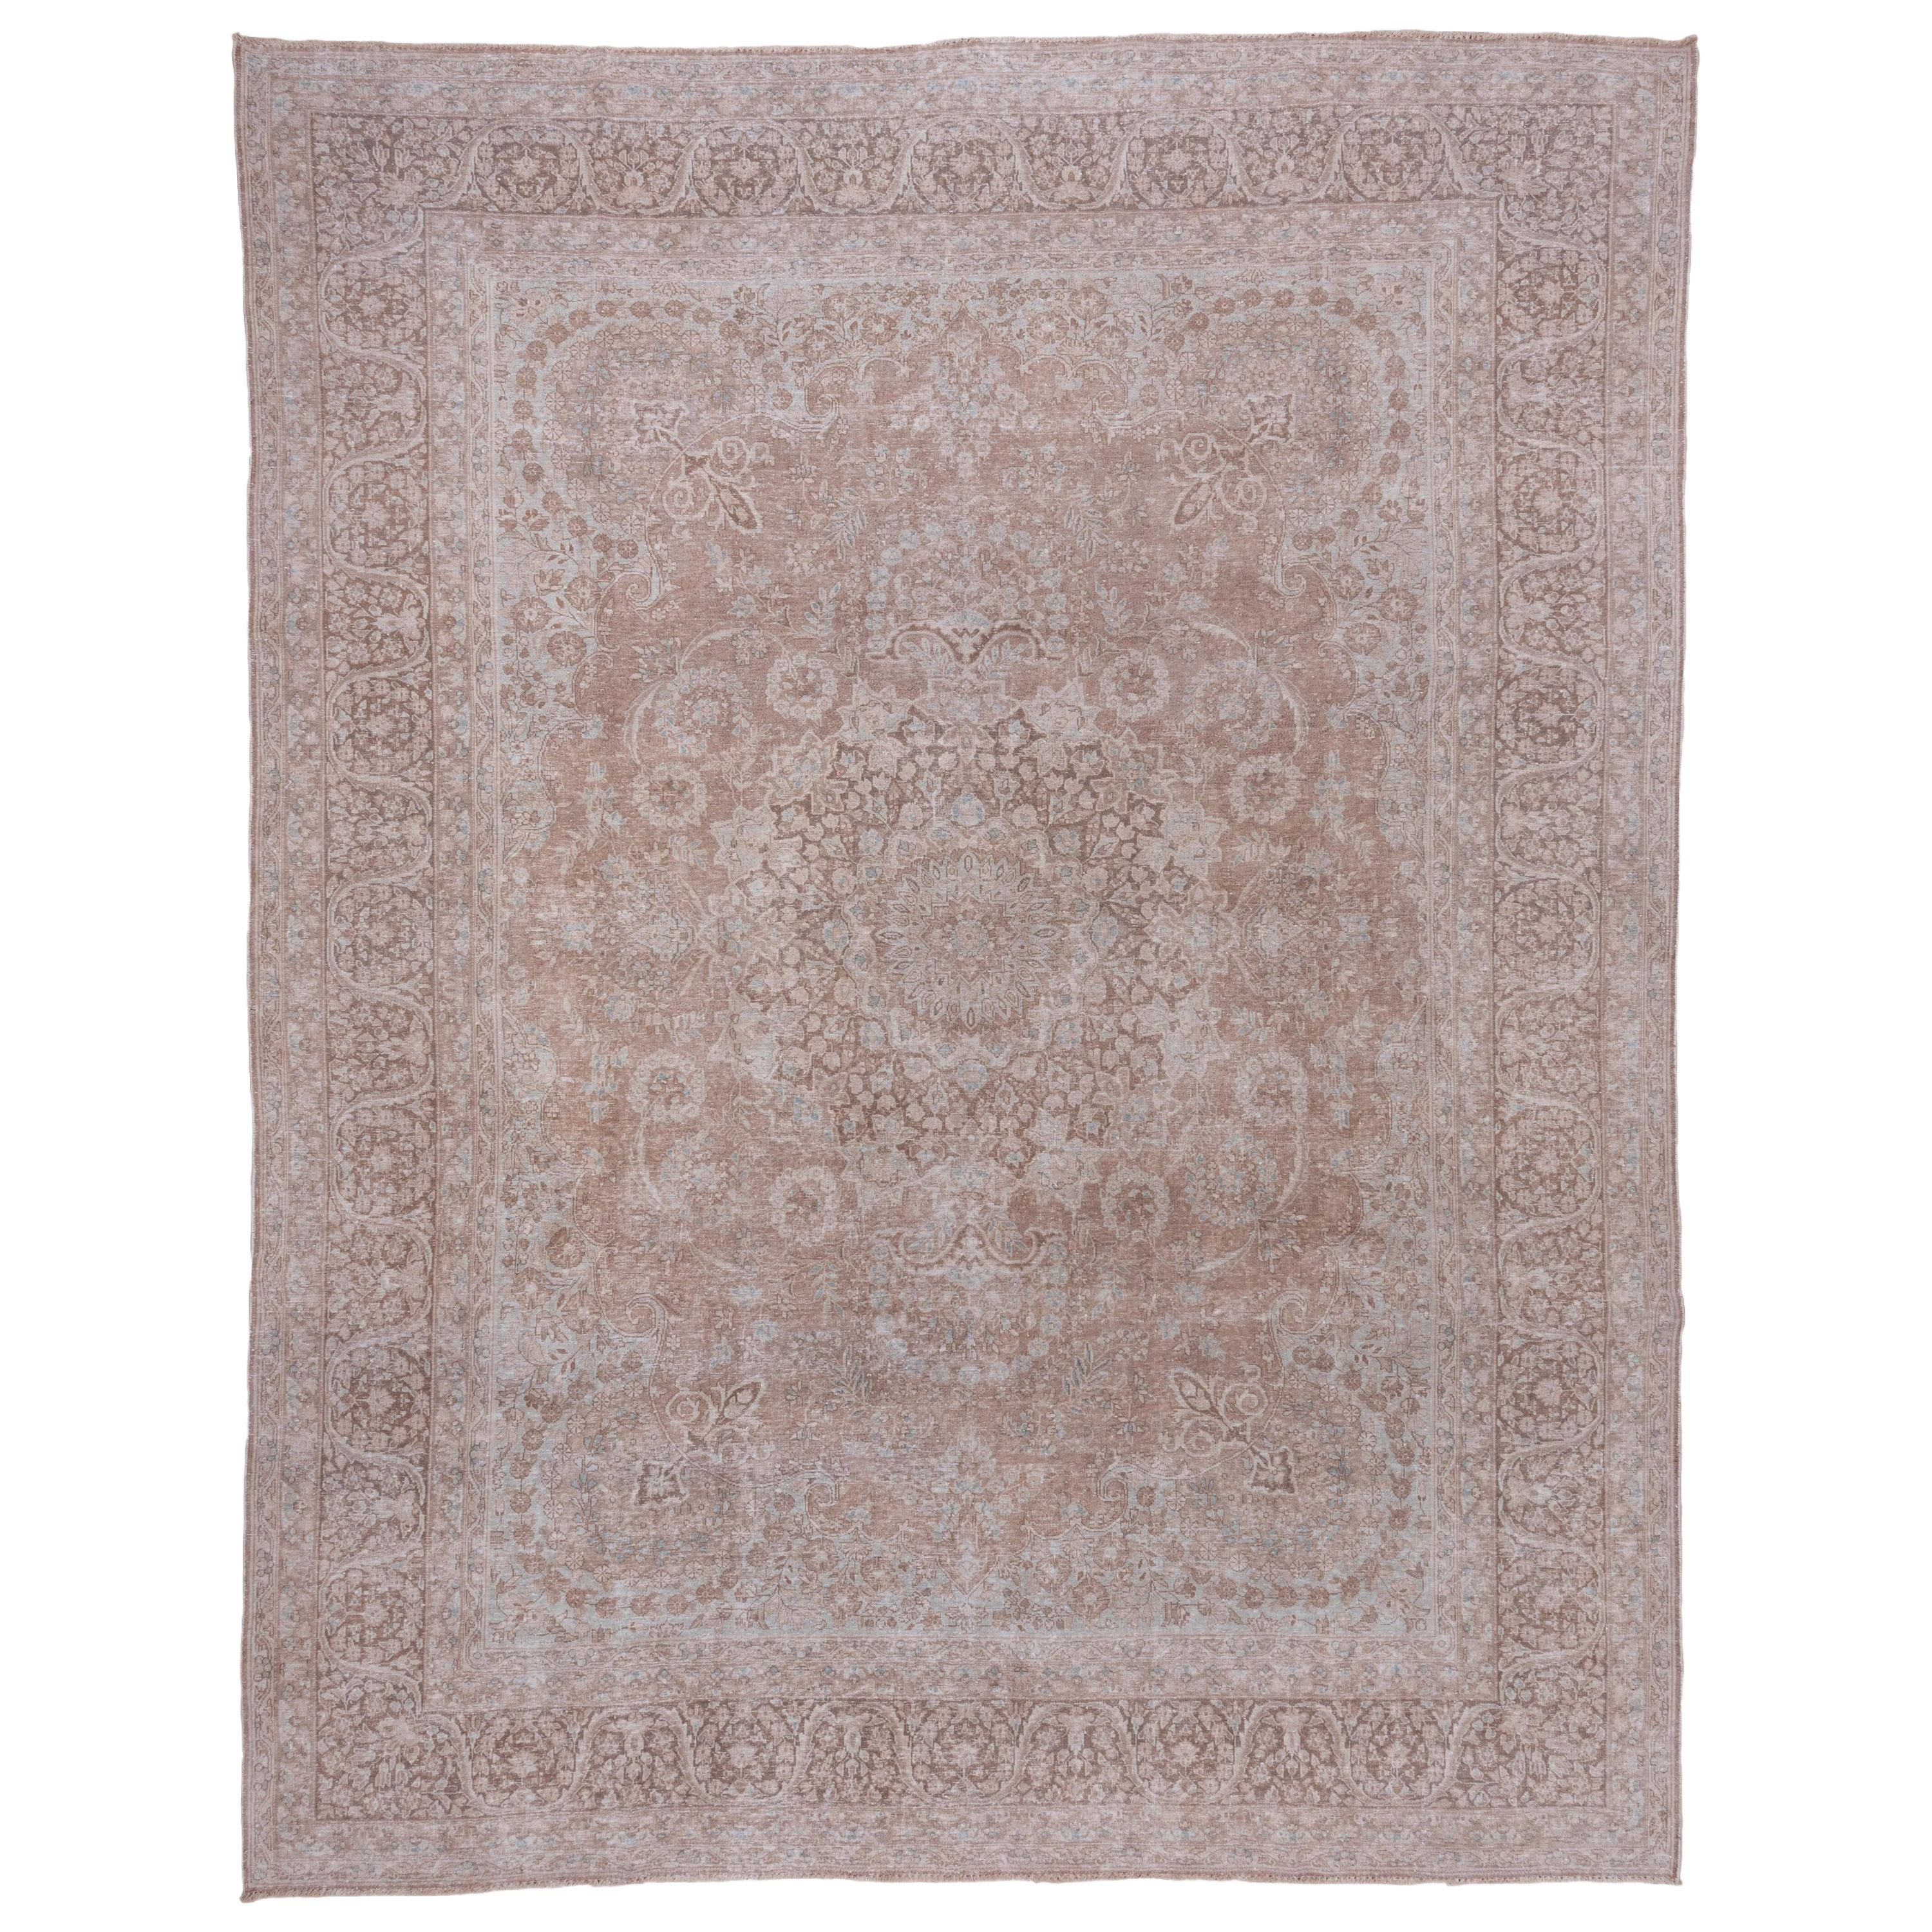 Vintage Persian Tabriz Carpet, Light Brown Field For Sale